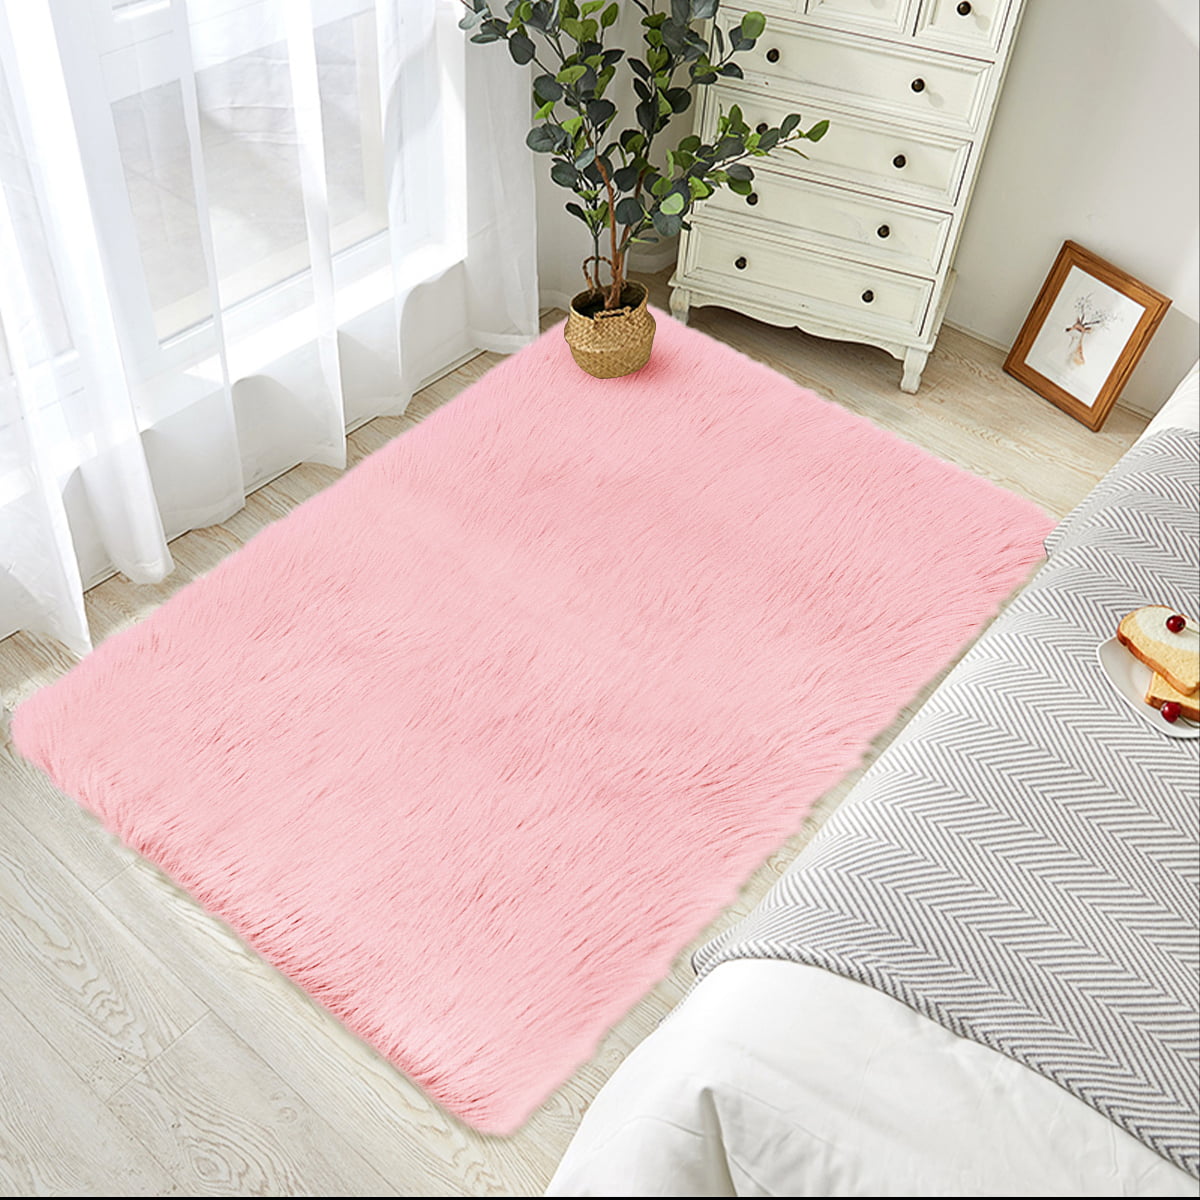 Large Hairy Carpet Rectangular Carpet Fluffy Fur Area Rug Bedroom Soft Floor Mat 